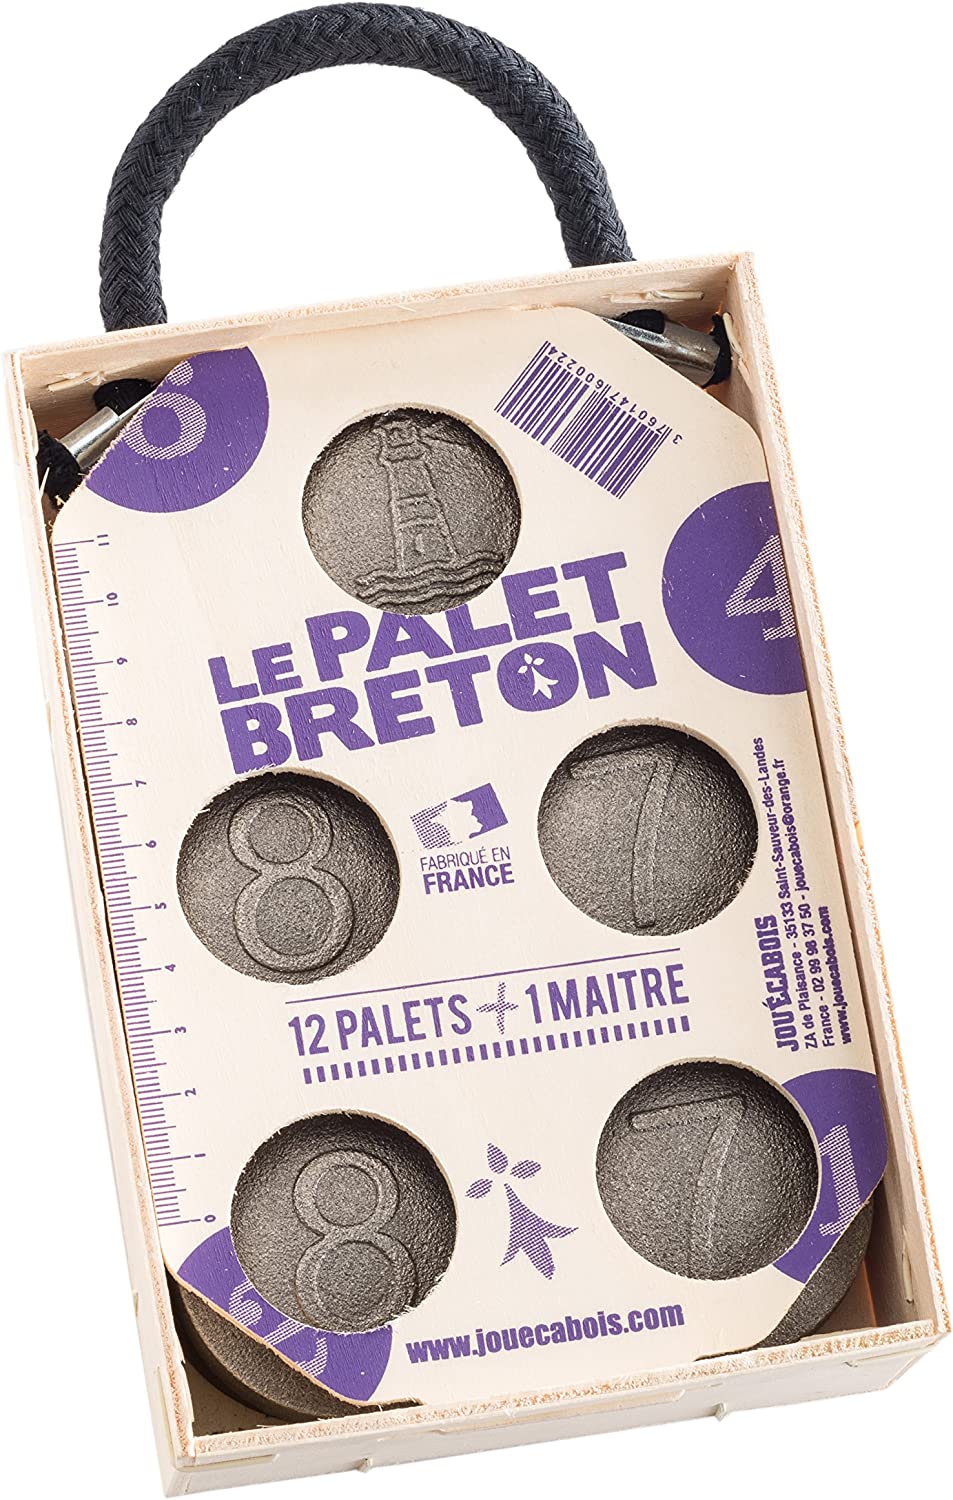 Kit de palet breton complet